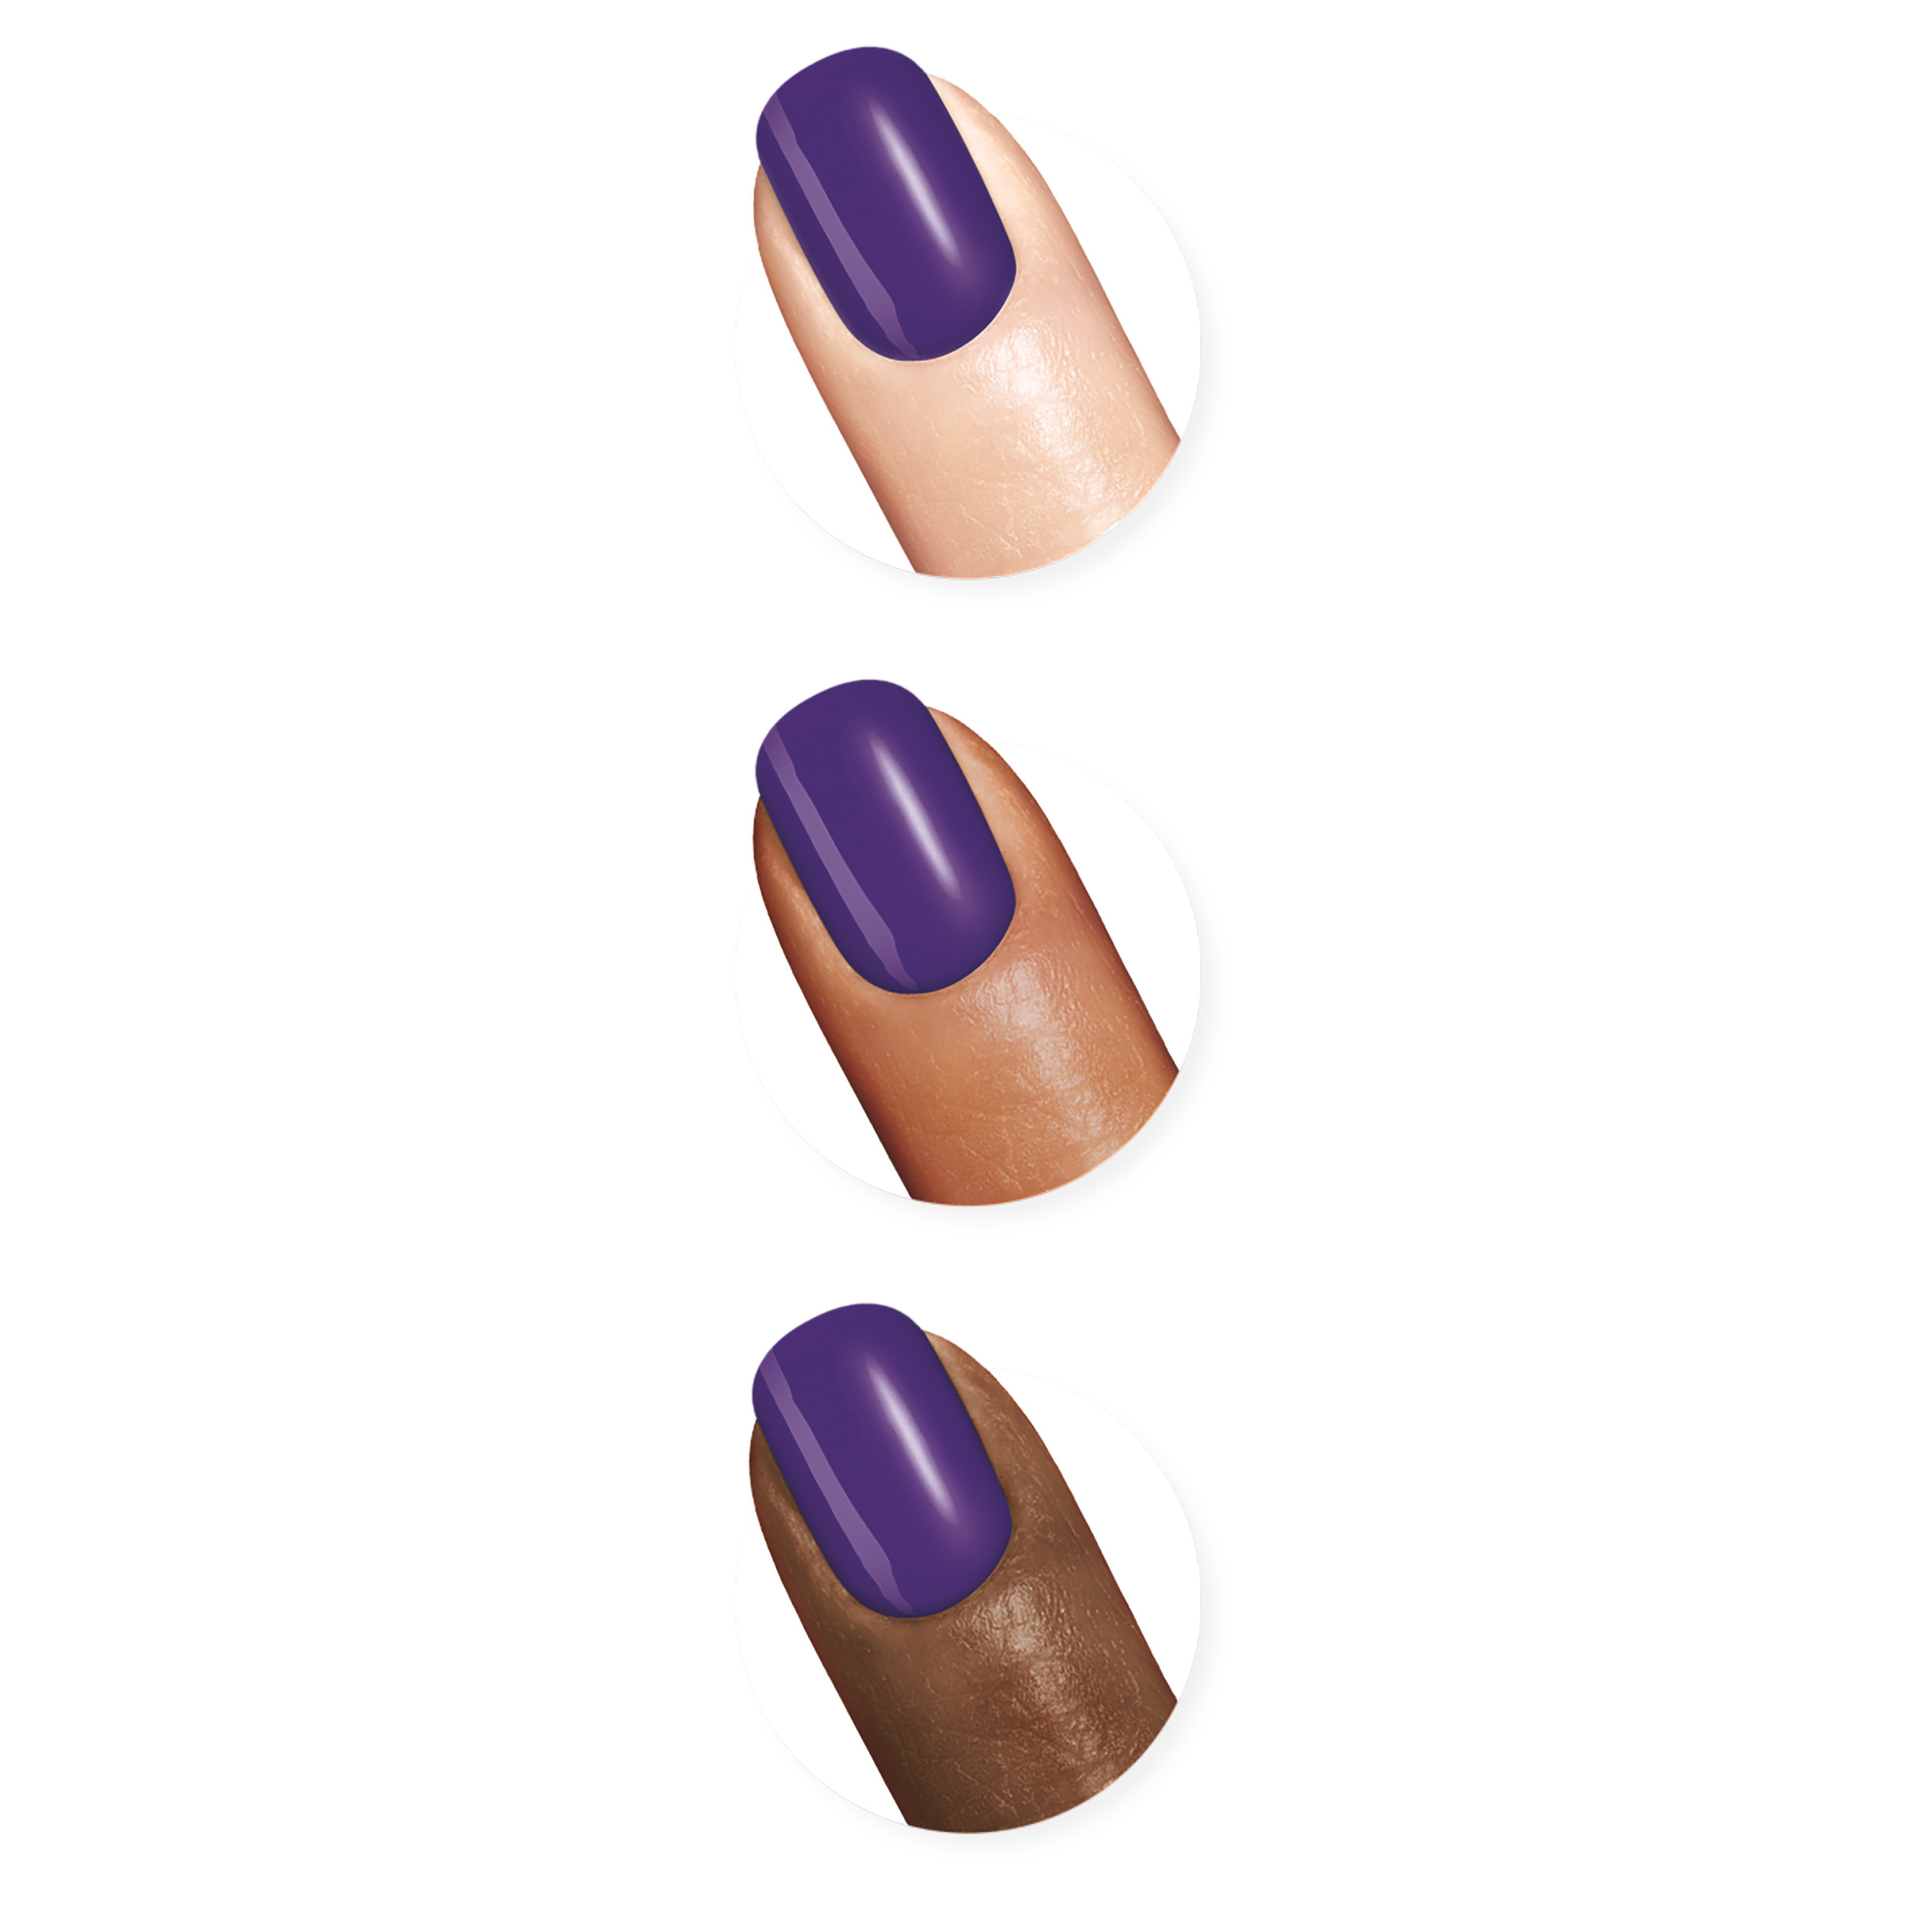 Sally Hansen Xtreme Wear Nail Polish, Purple Craze, 0.4 oz, Chip Resistant, Bold Color - image 4 of 14